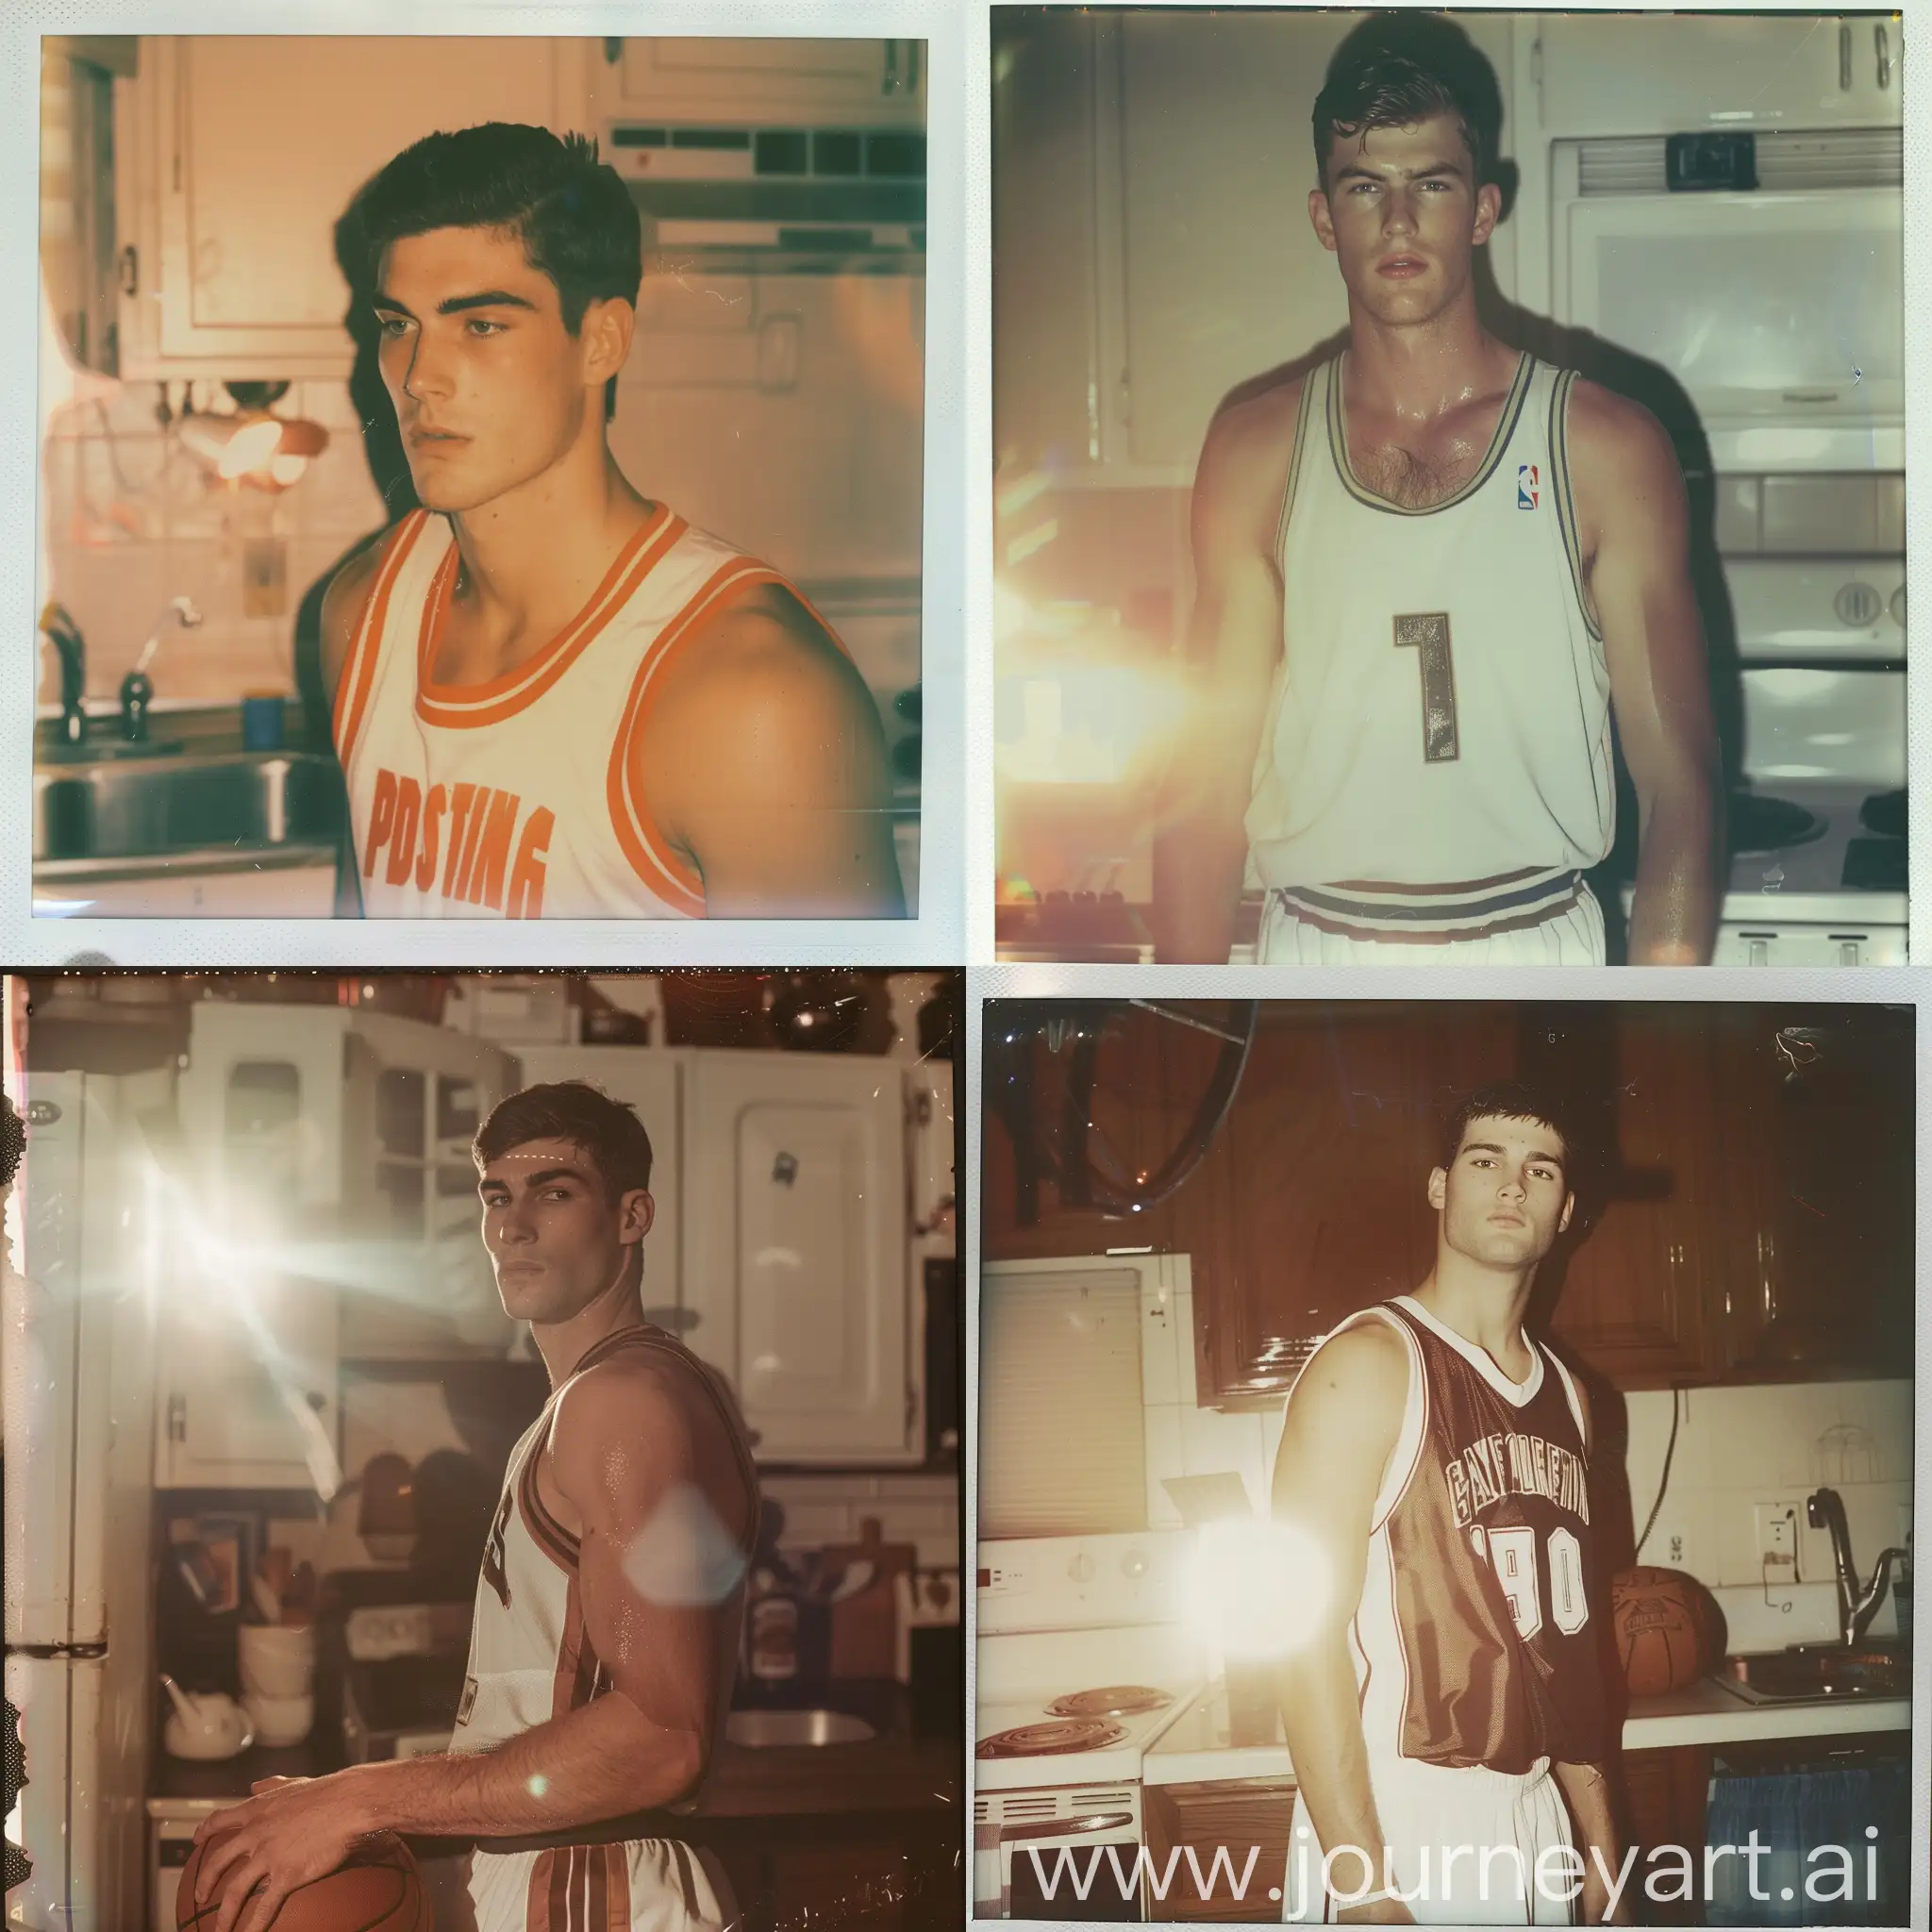 Vintage-Style-Basketball-Player-Captured-on-Polaroid-in-Kitchen